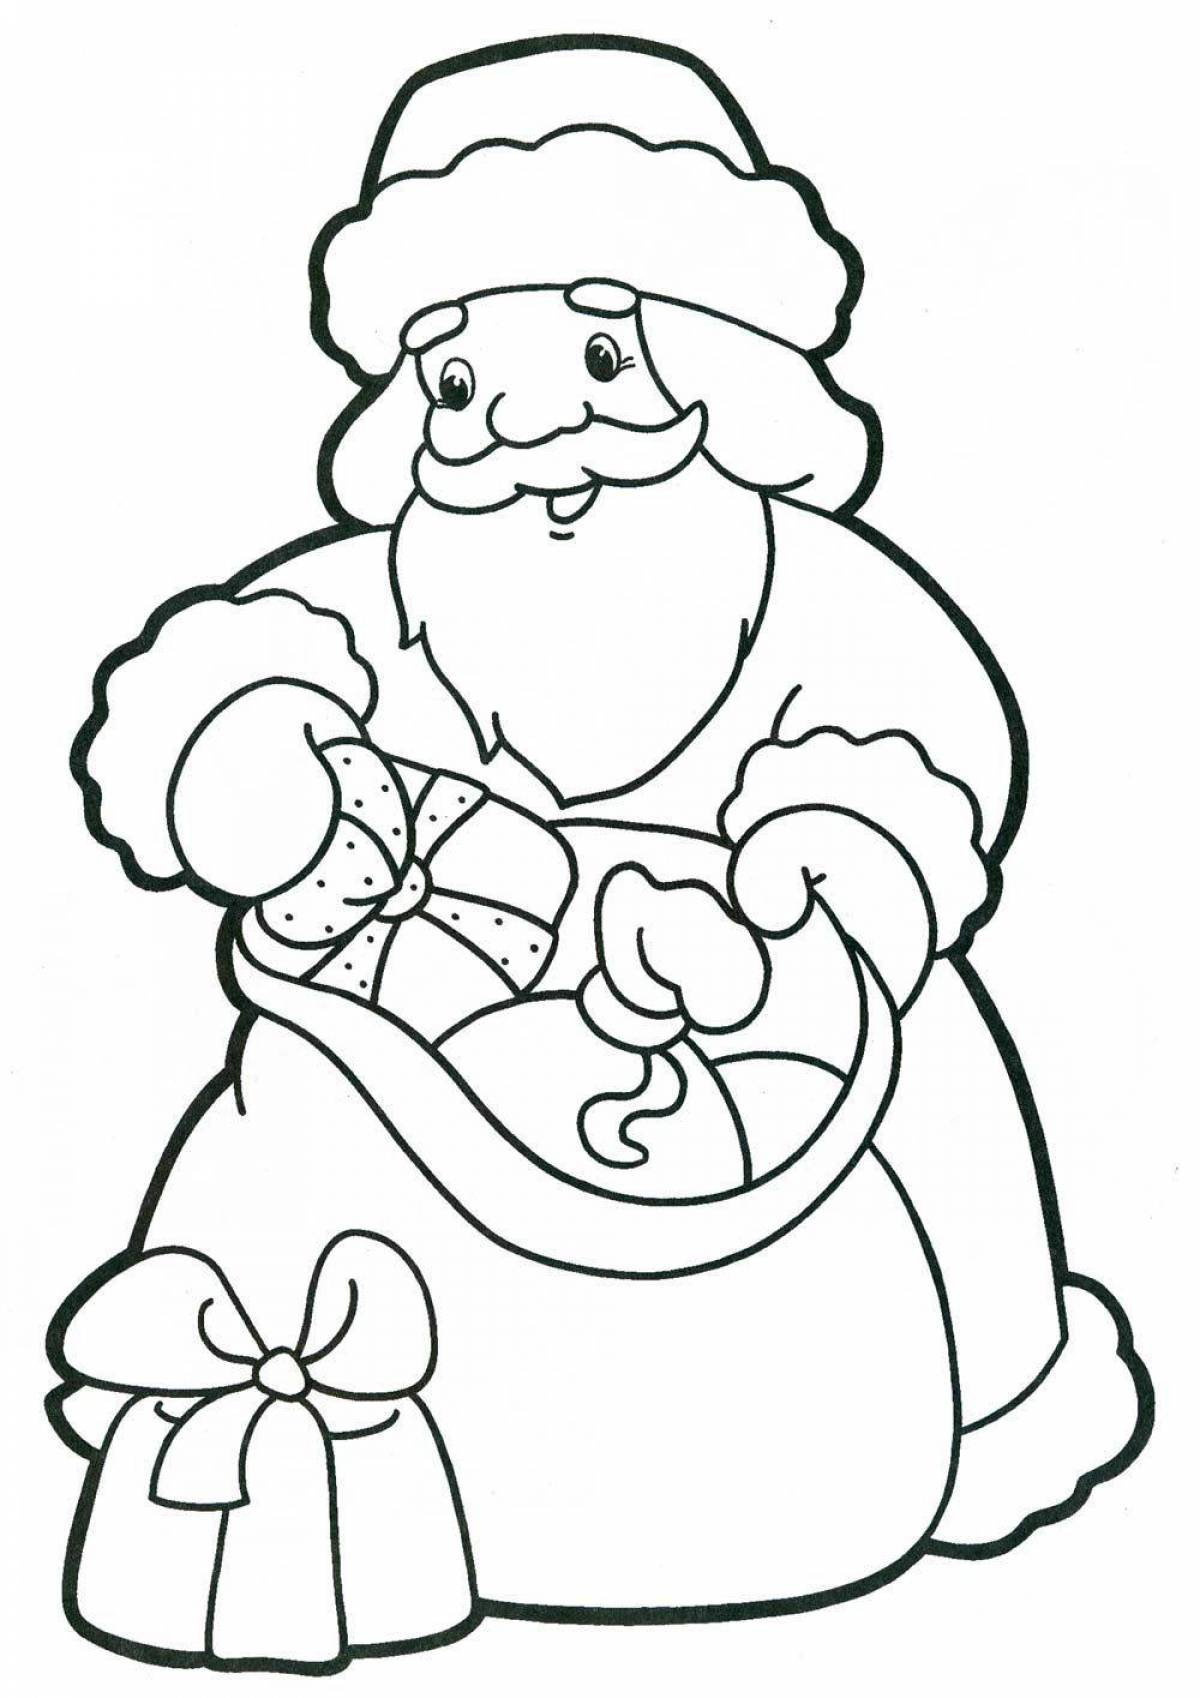 Colorful santa claus coloring page